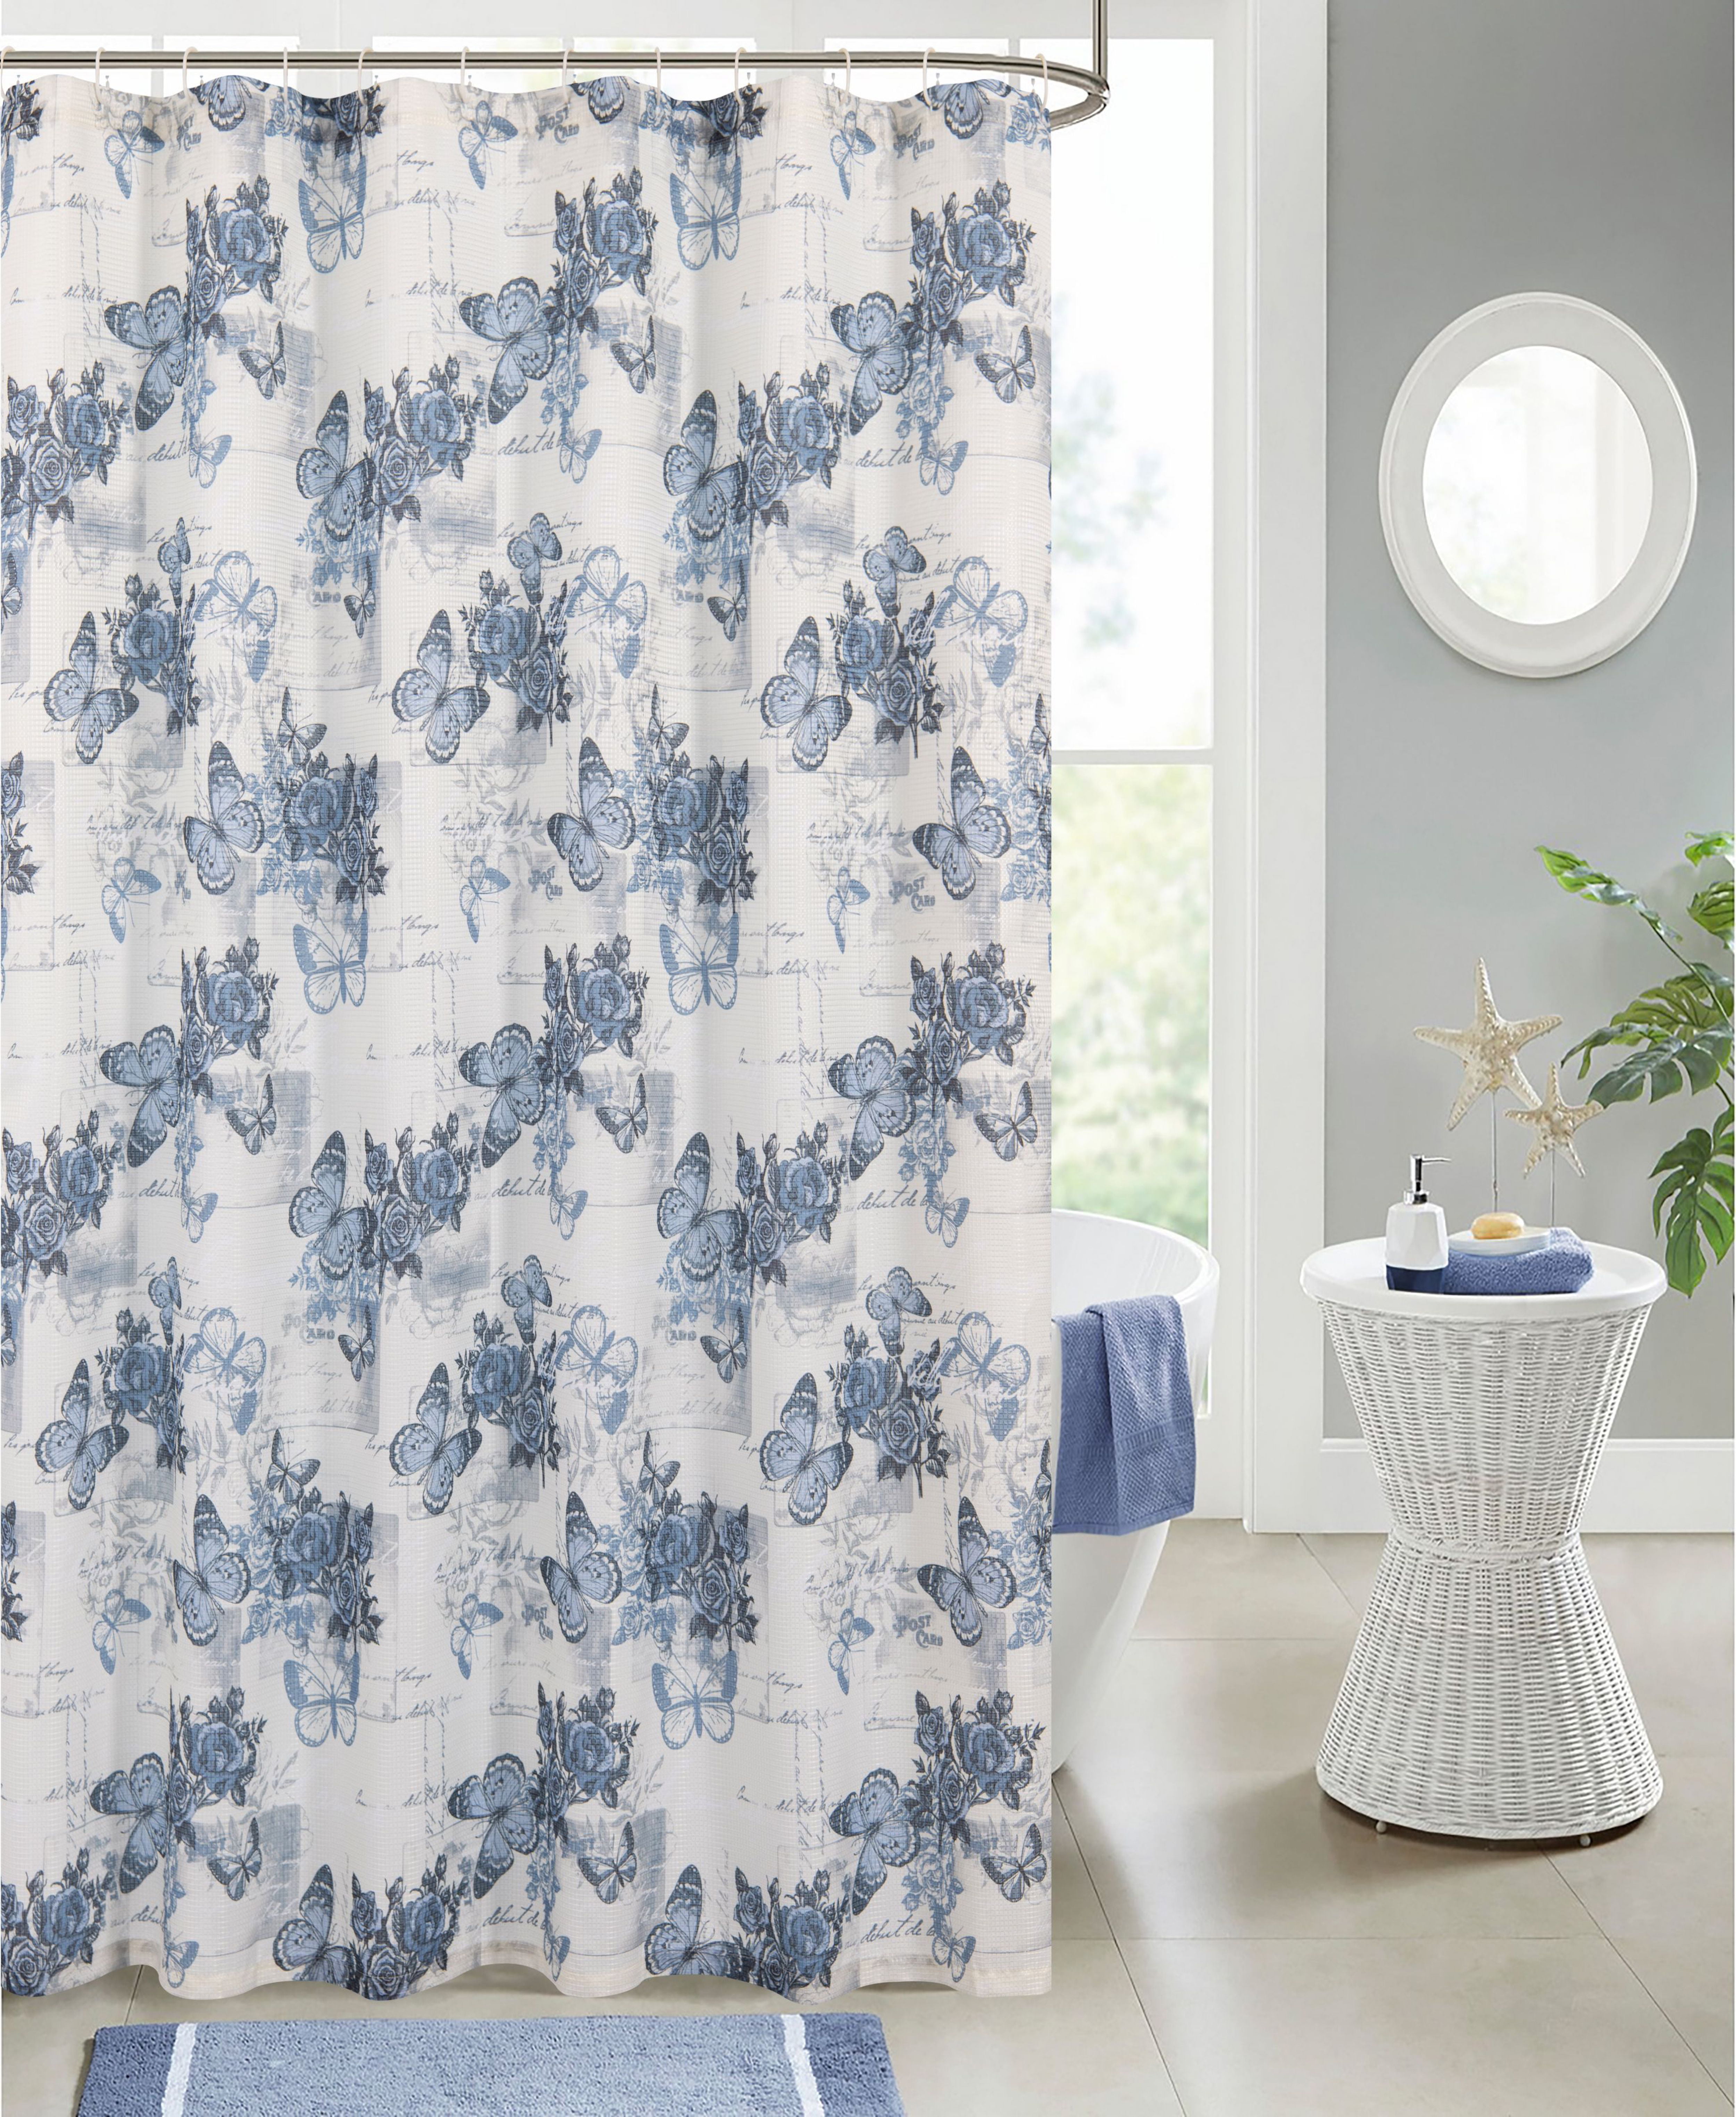 Floral Music Butterfly Girl Shower Curtain Liner Waterproof Fabric Bathroom Mat 